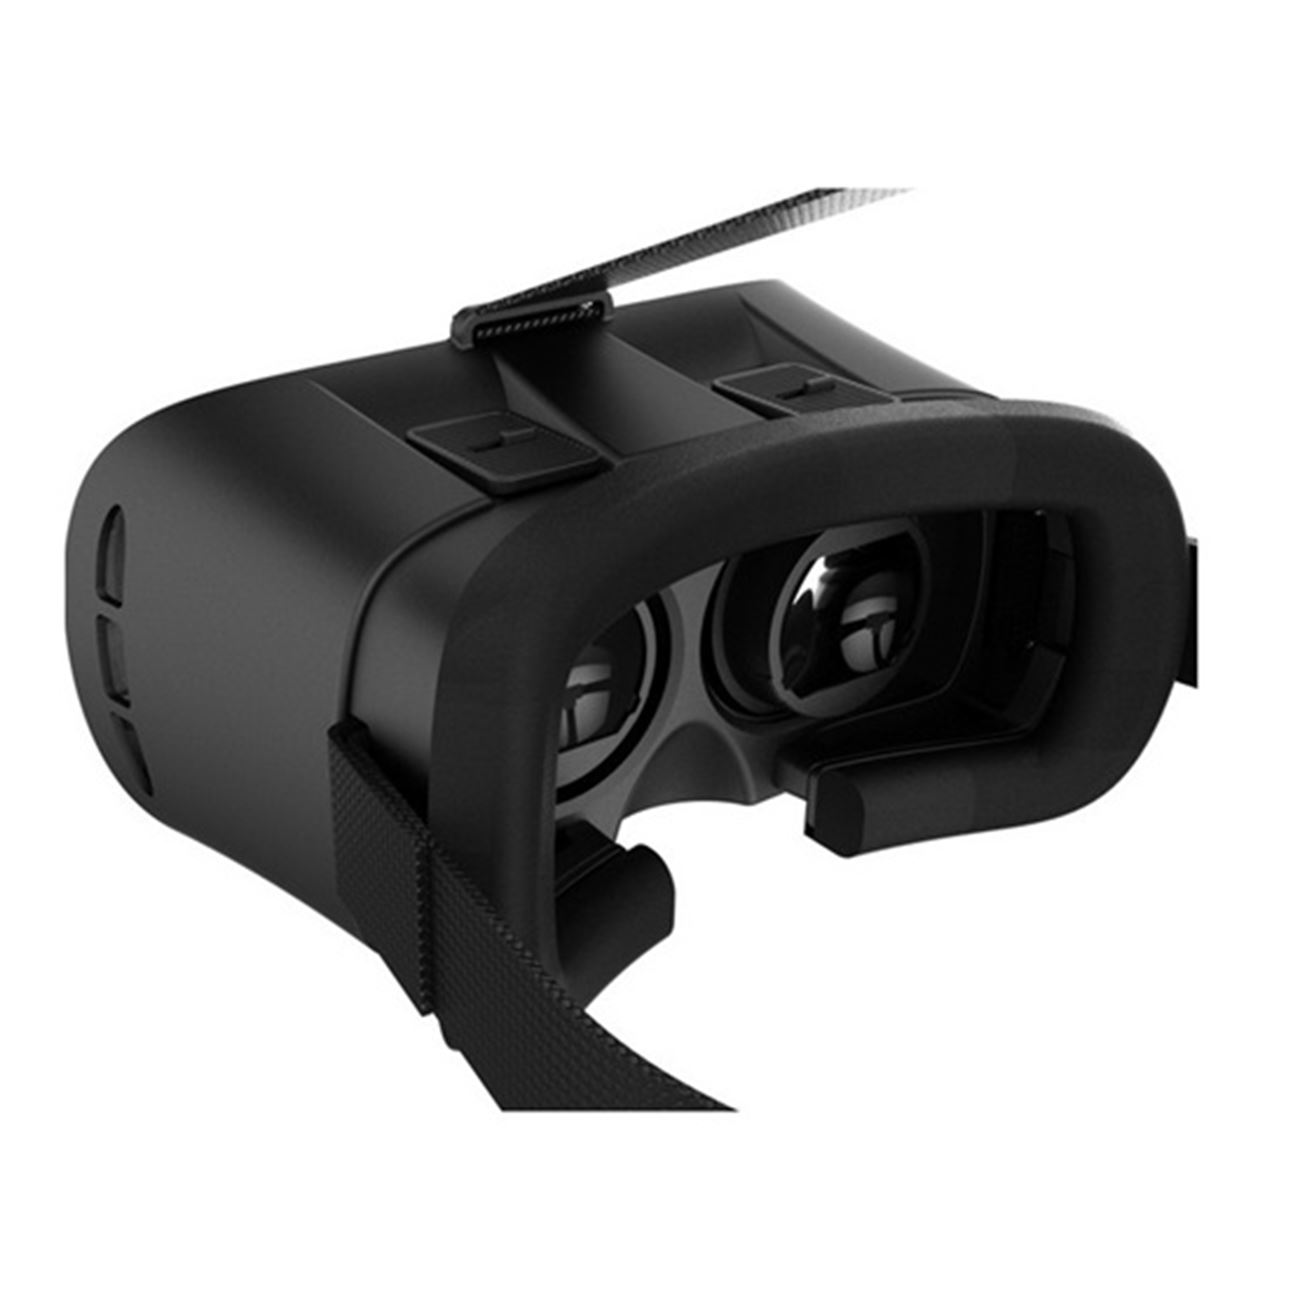 Ray Overwhelming Ray VR Γυαλιά Εικονικής Πραγματικότητας - VR Box - Headset 3D για Όλα τα Κινητά  - Απολαύστε VR Video Τρισδιάστατα και Πανοραμικά 360 ° < ΑΞεσουάρ Εικόνας